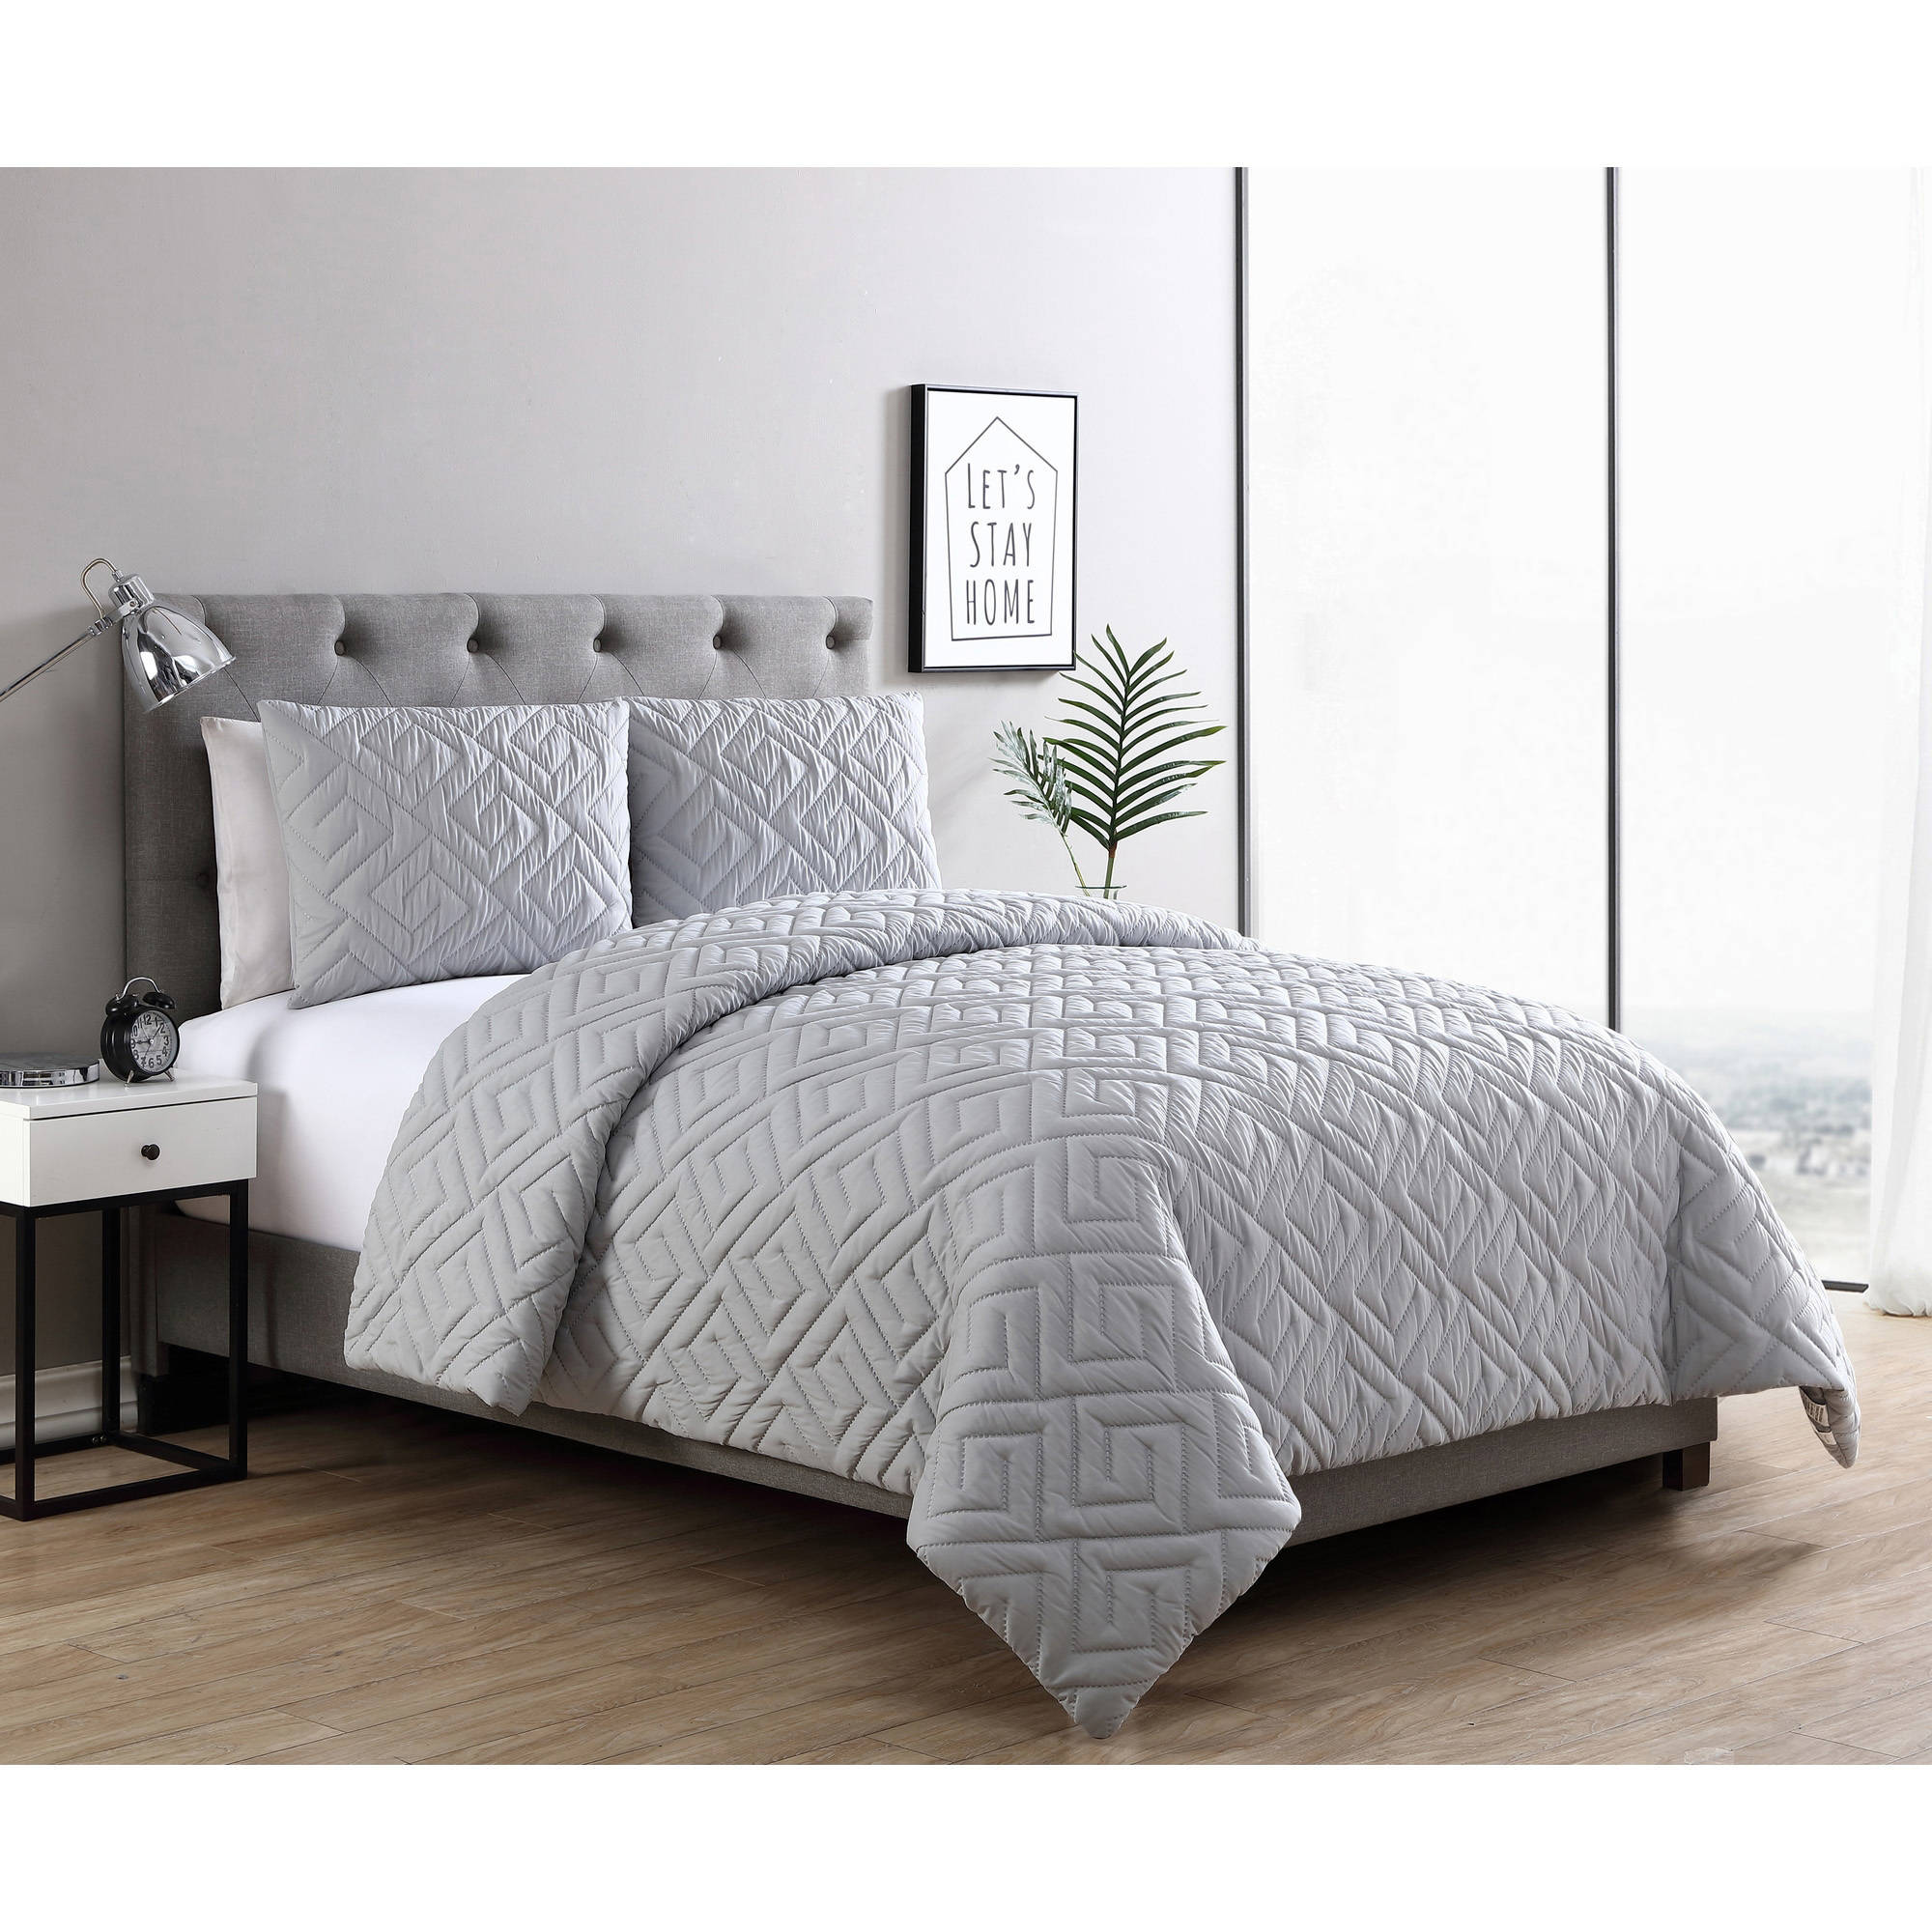 Mainstays Greek Key Pinsonic 3-piece bedding set starting at $10